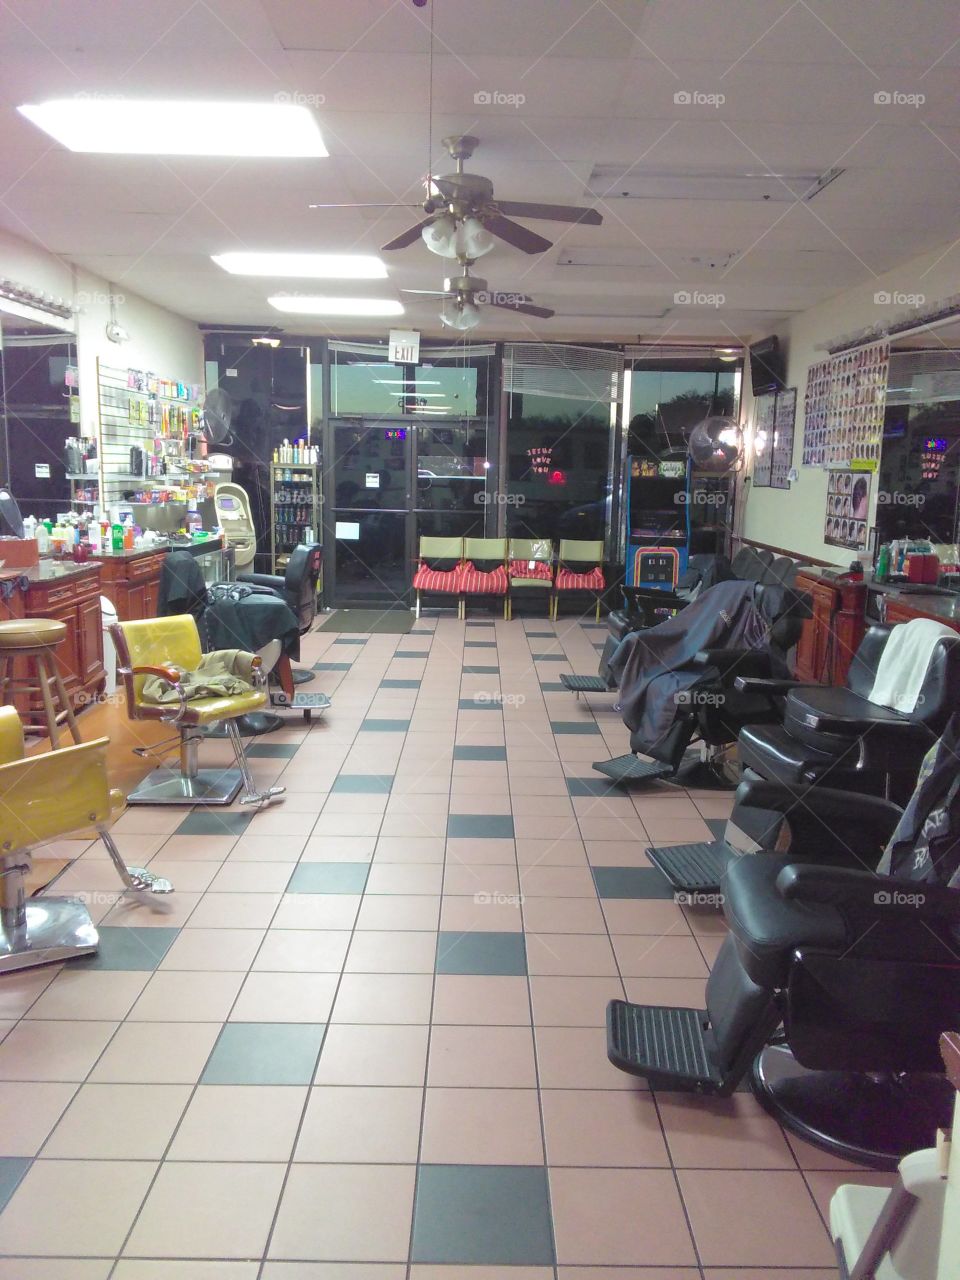 My barber shop.